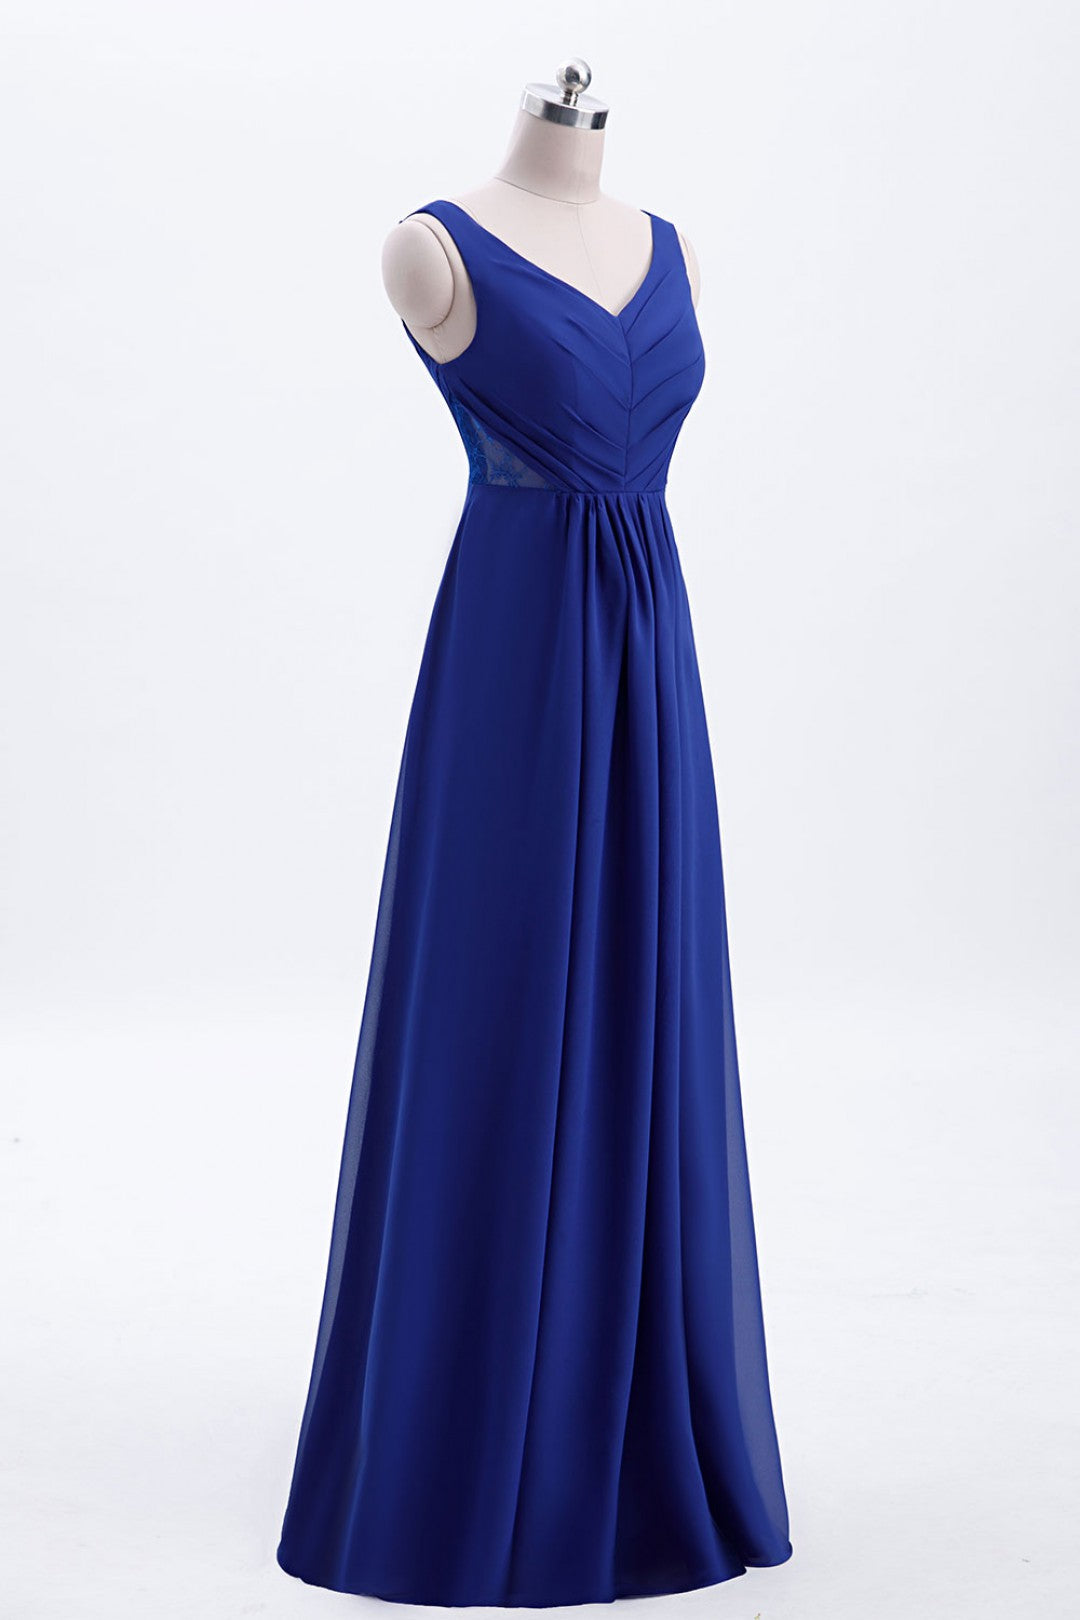 Party Dresses Online Shop, Royal Blue Pleated A-line Chiffon Long Bridesmaid Dress